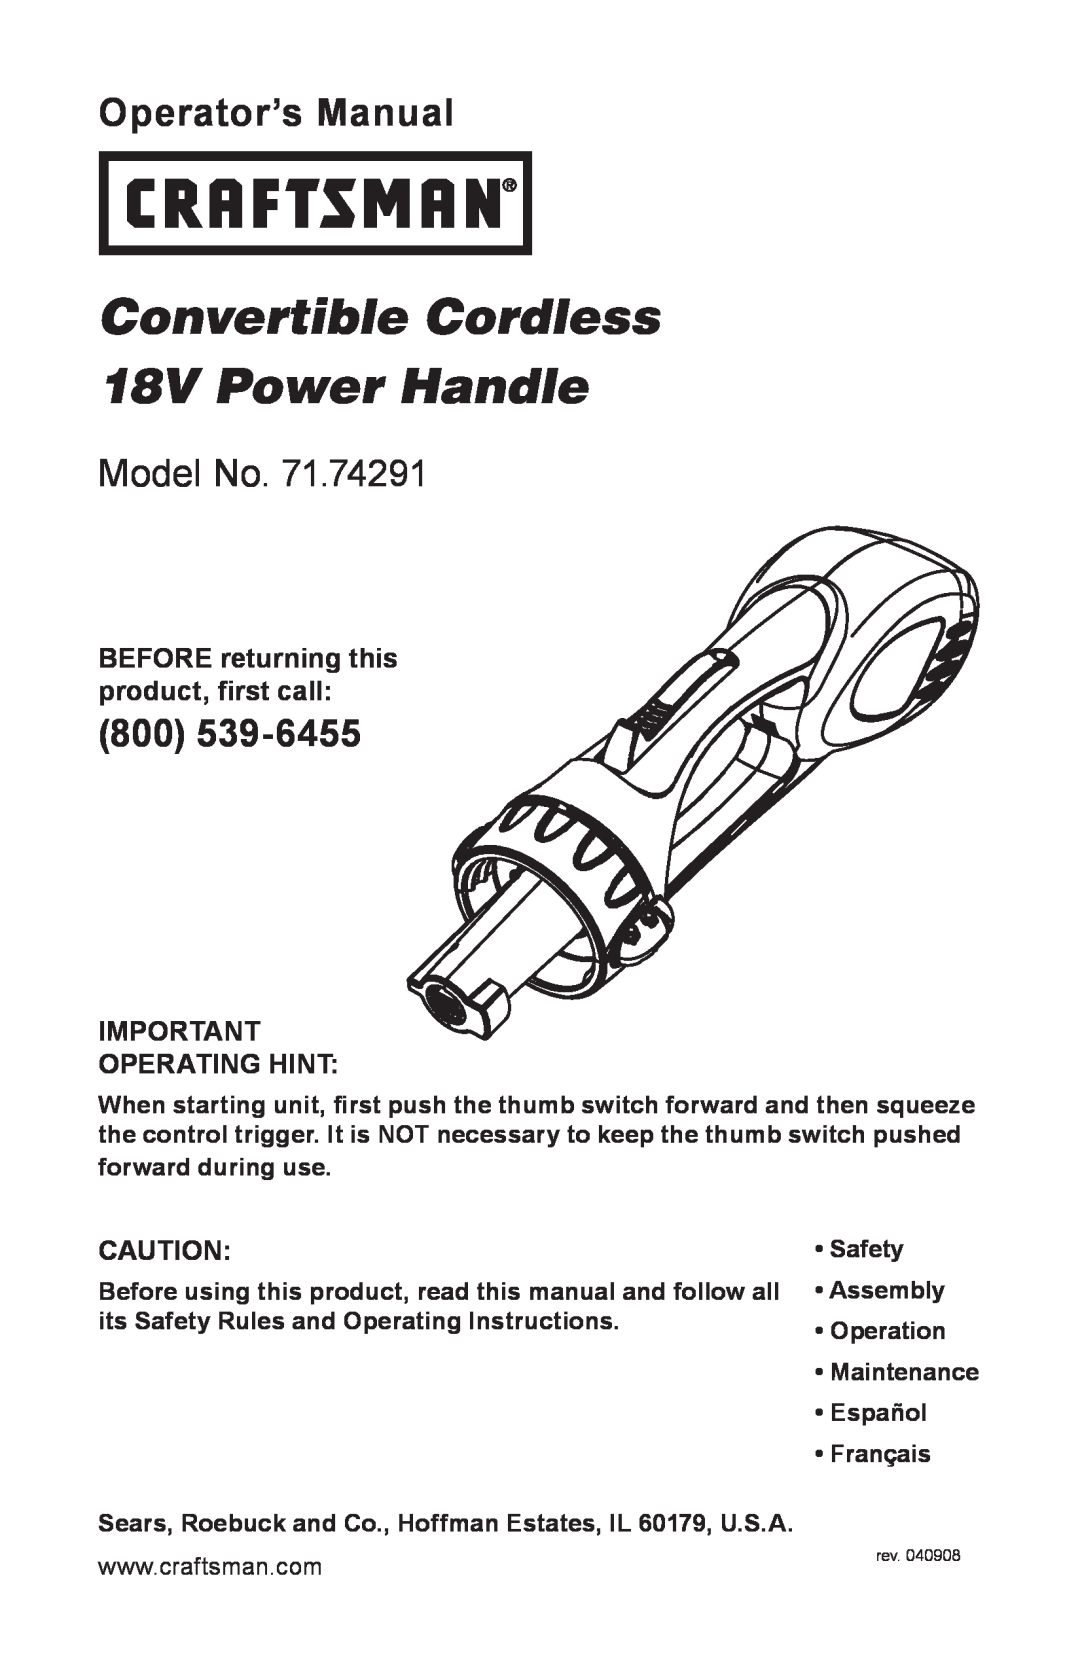 Craftsman 71.74291 operating instructions Convertible Cordless 18V Power Handle, Operator’s Manual, Model No 